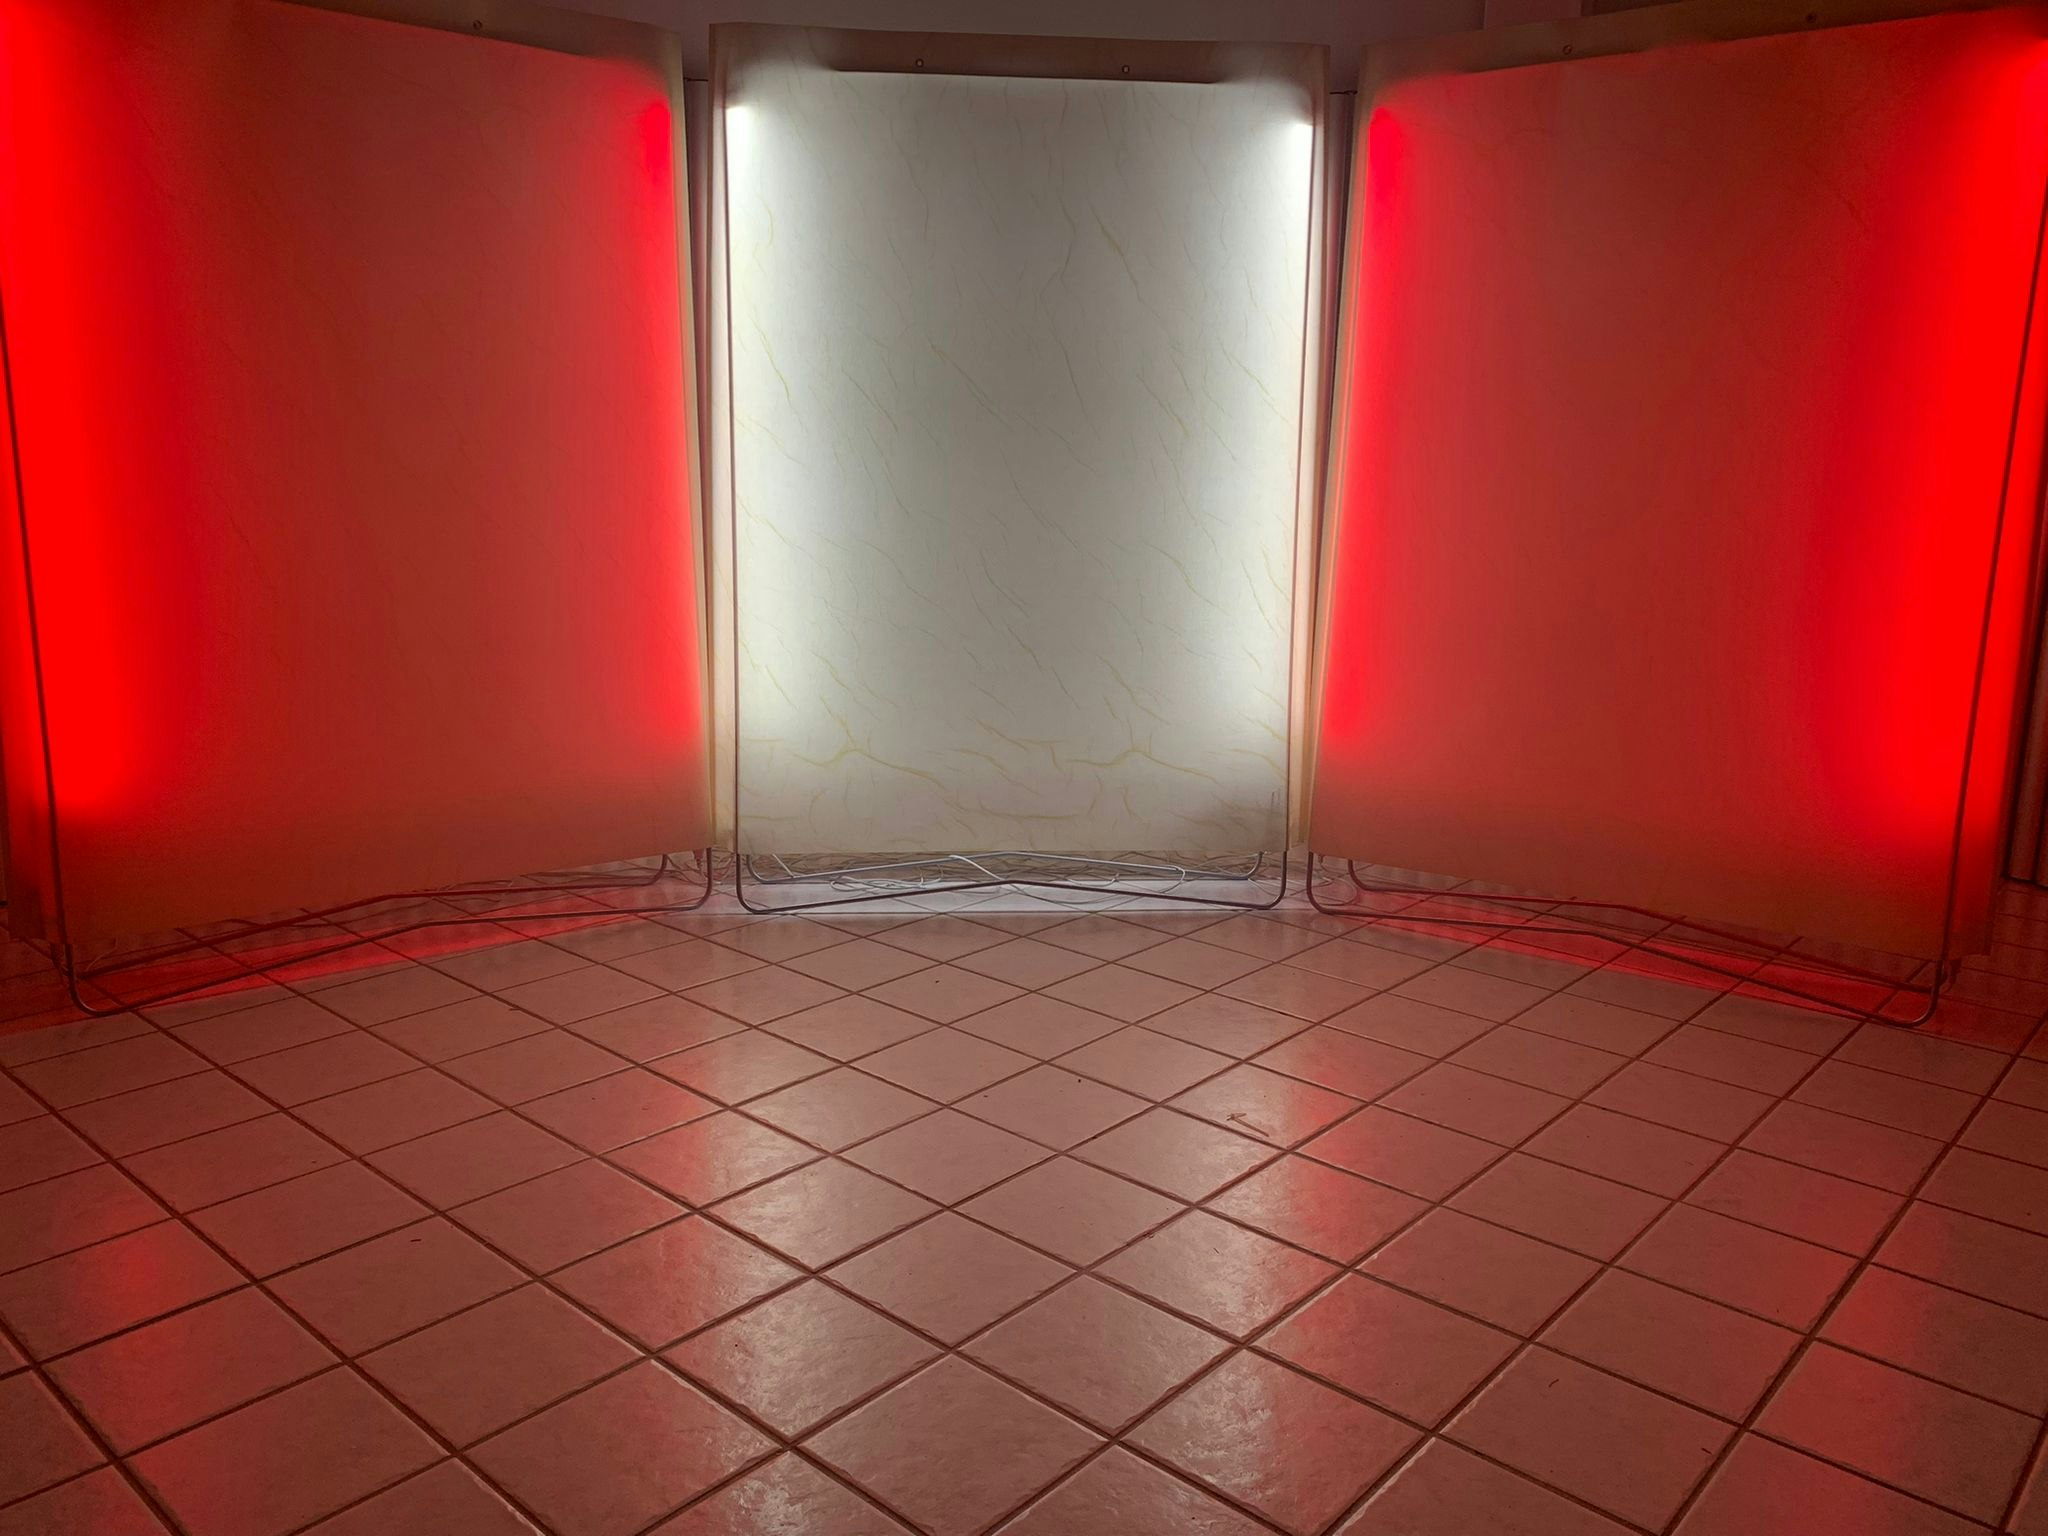 Hyr LED vägg - 160 x 100 cm